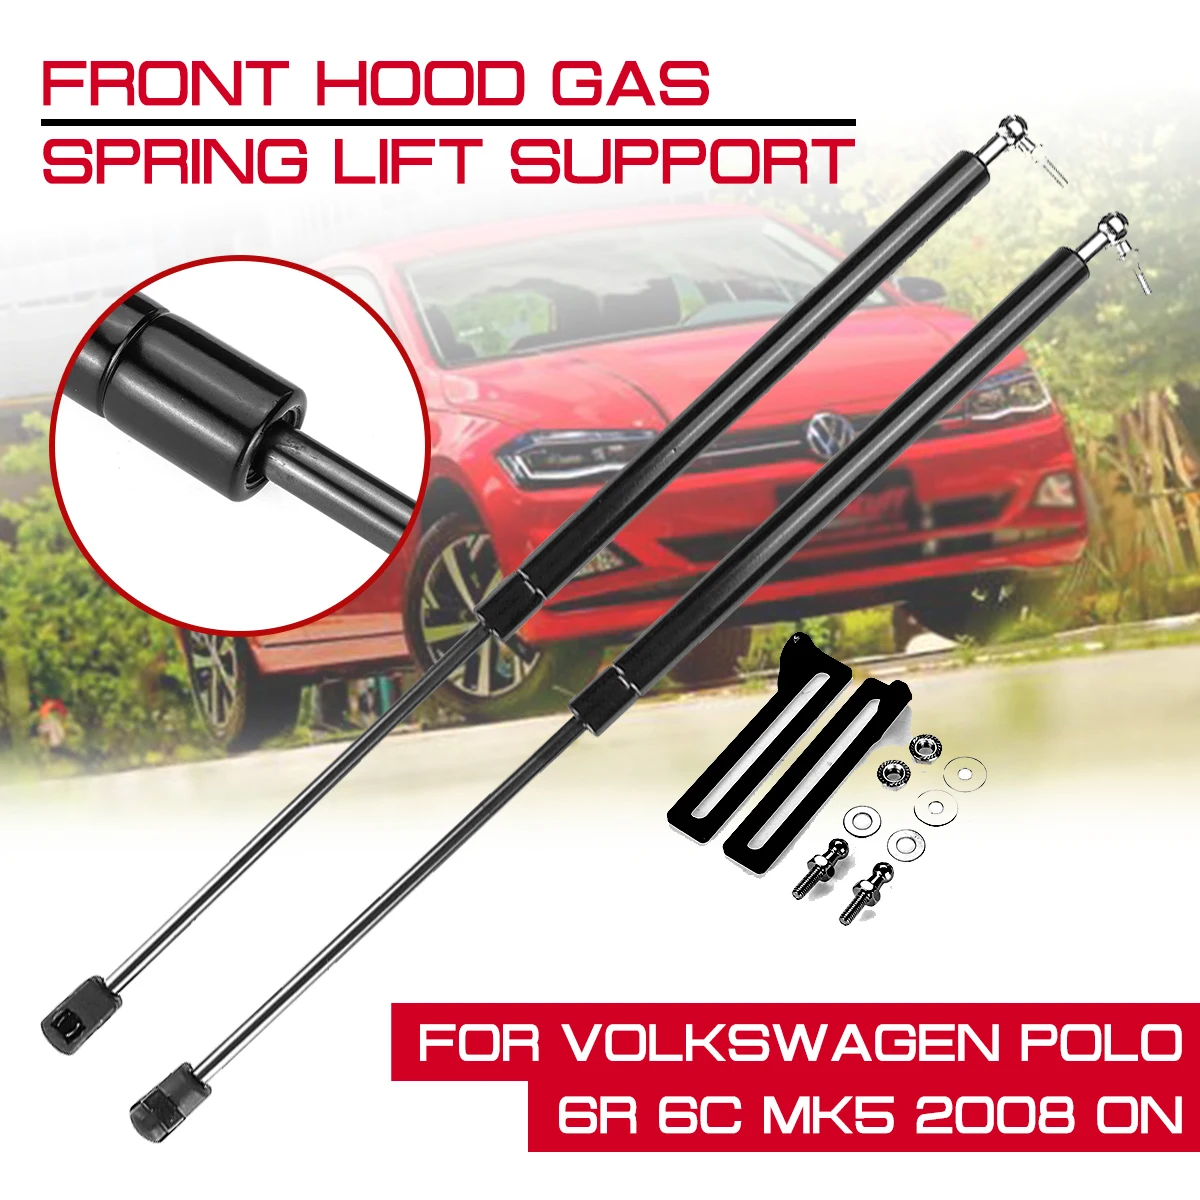 

Lift Strut Bars Support Rod Gas Spring Refit Bonnet Hood Gas Shock For VW Polo 6R 6C MK5 2008 2009+ For Volkswagen